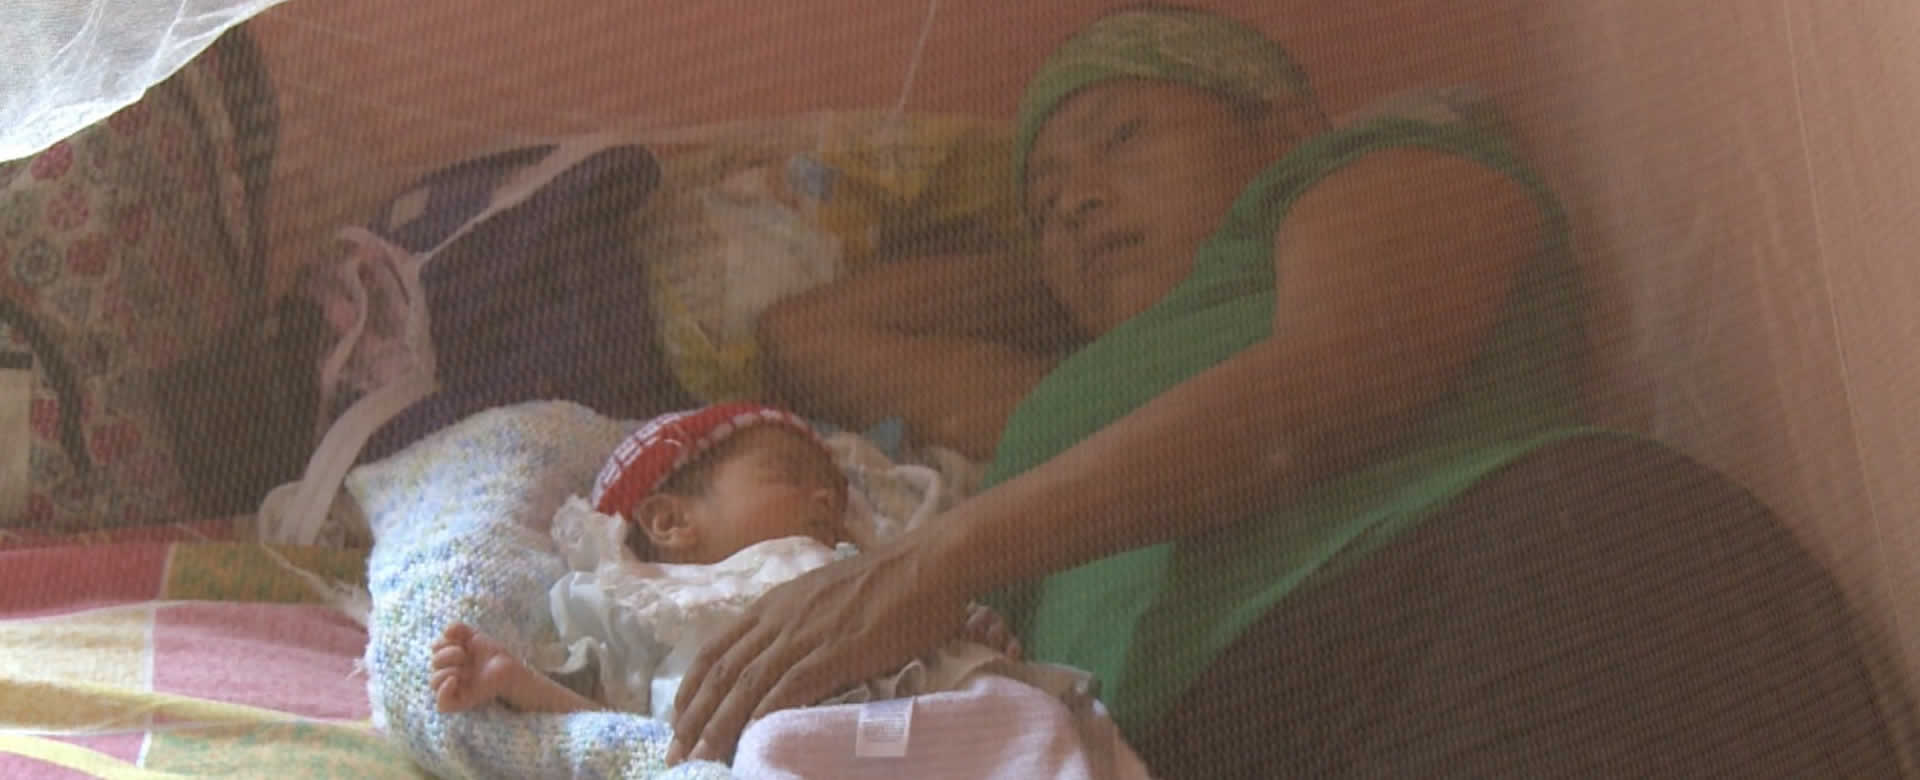 Casa materna de Matiguas contribuye a la reducción de muertes materno-infantil